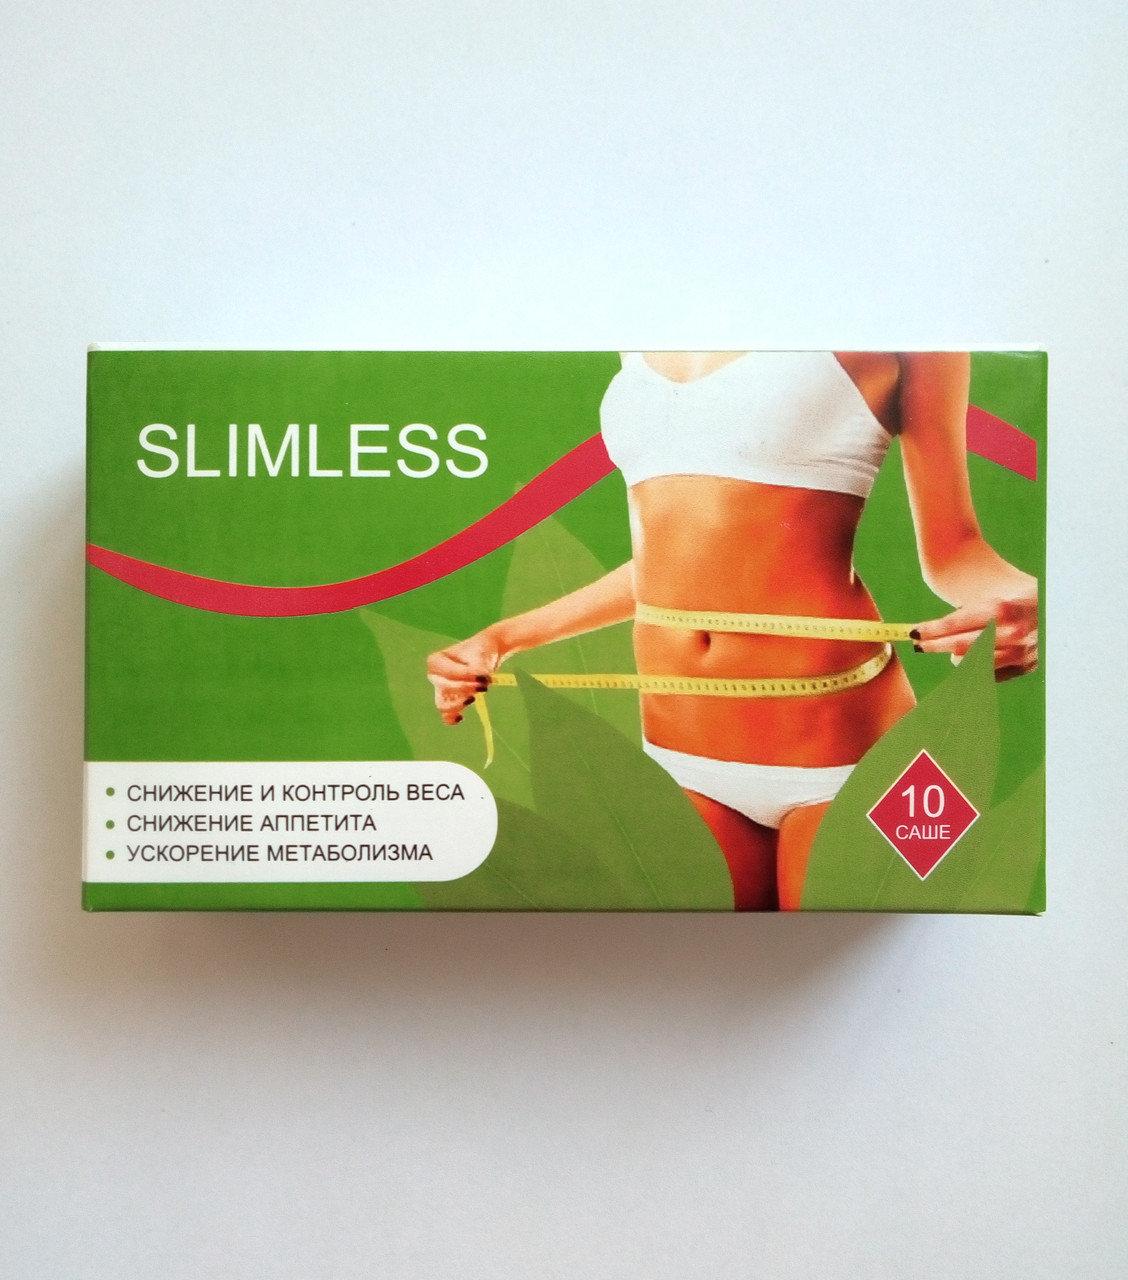 Slimless (Слимлесс) саше для схуднення 17429